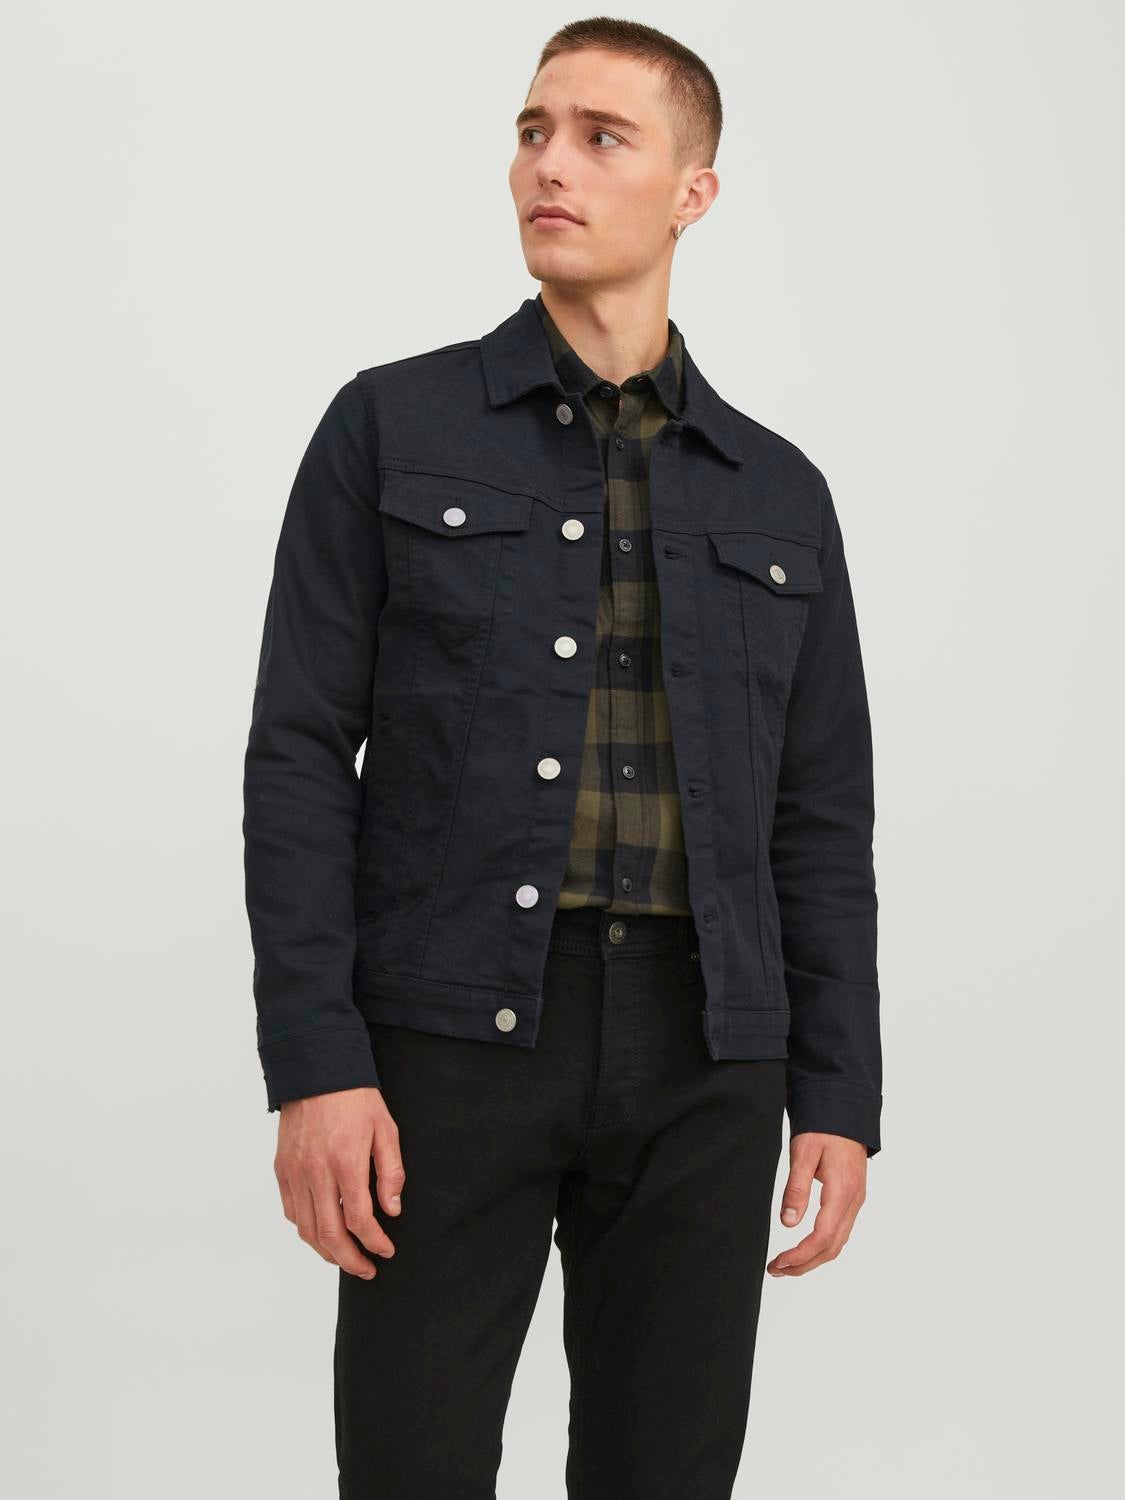 discount 78% Blue L Jack & Jones Jack & Jones denim jacket MEN FASHION Jackets Jean 